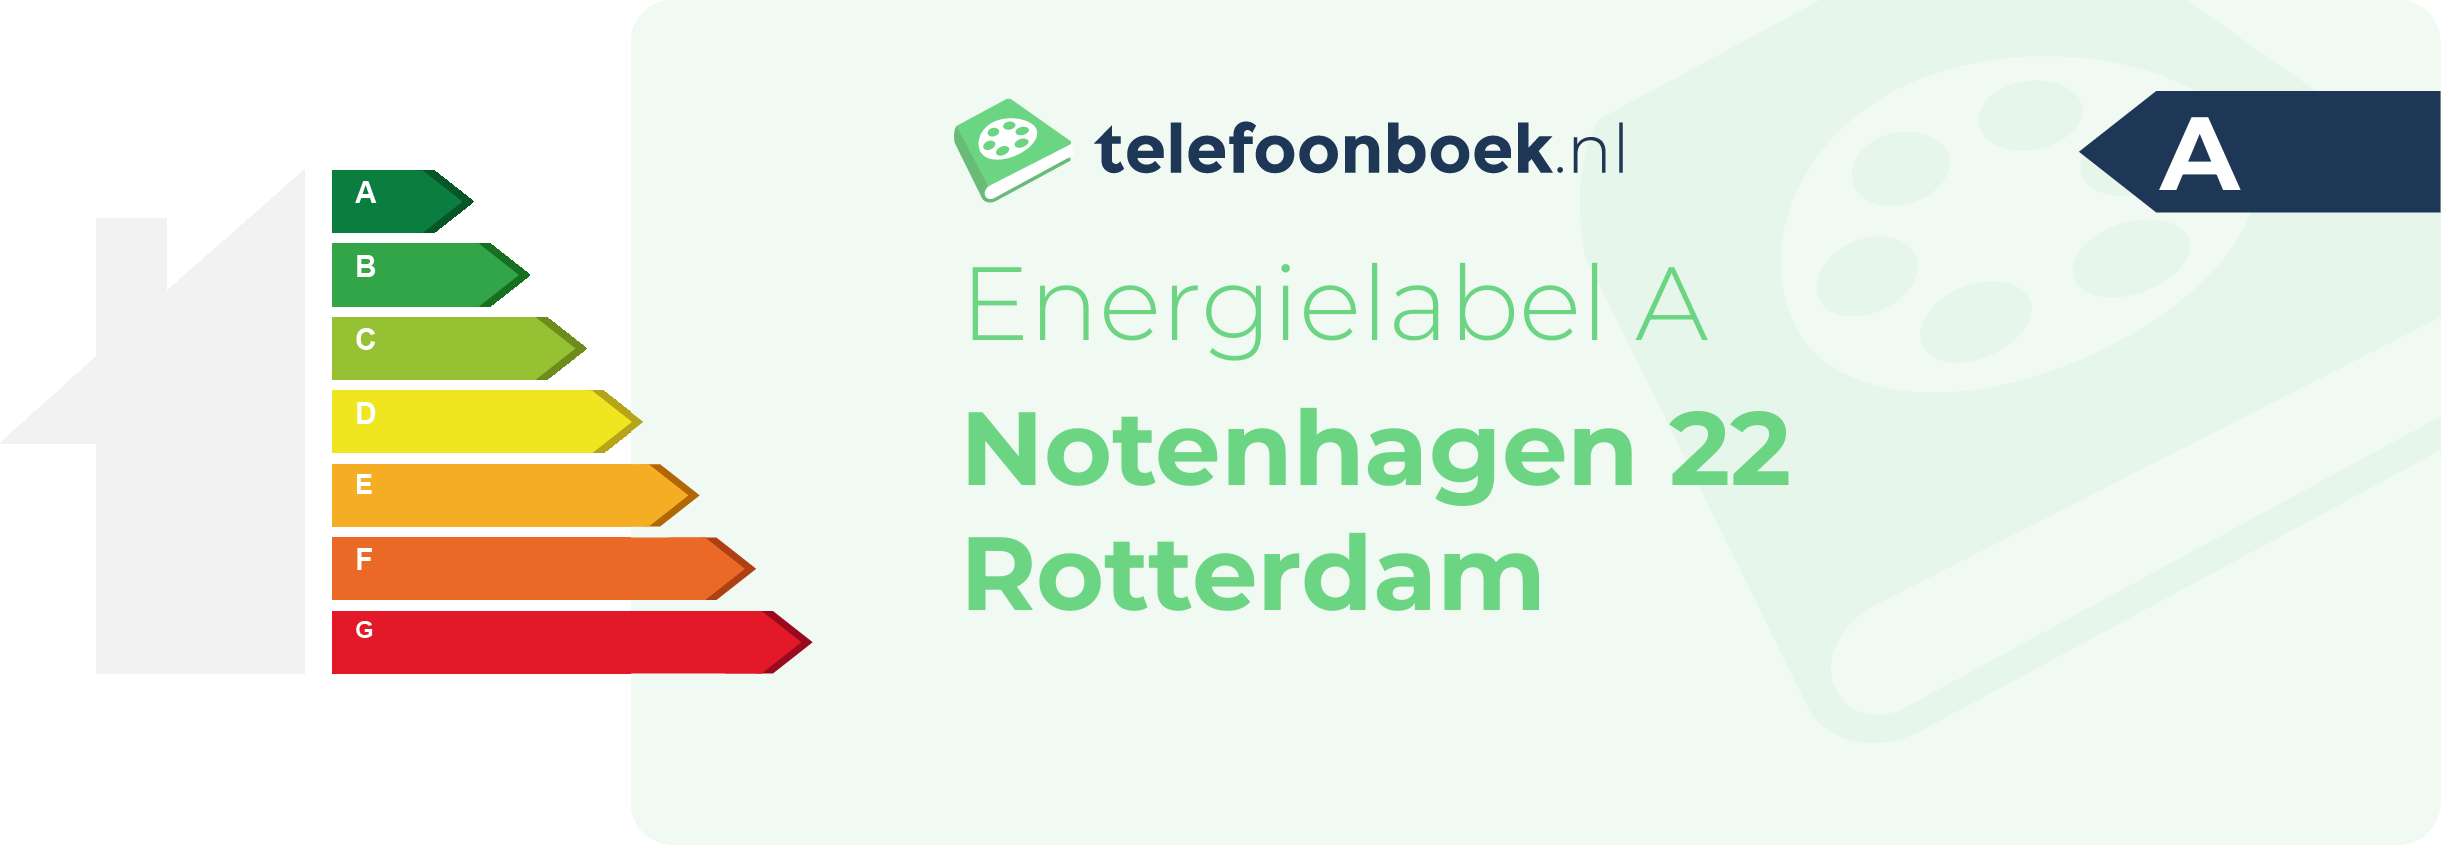 Energielabel Notenhagen 22 Rotterdam